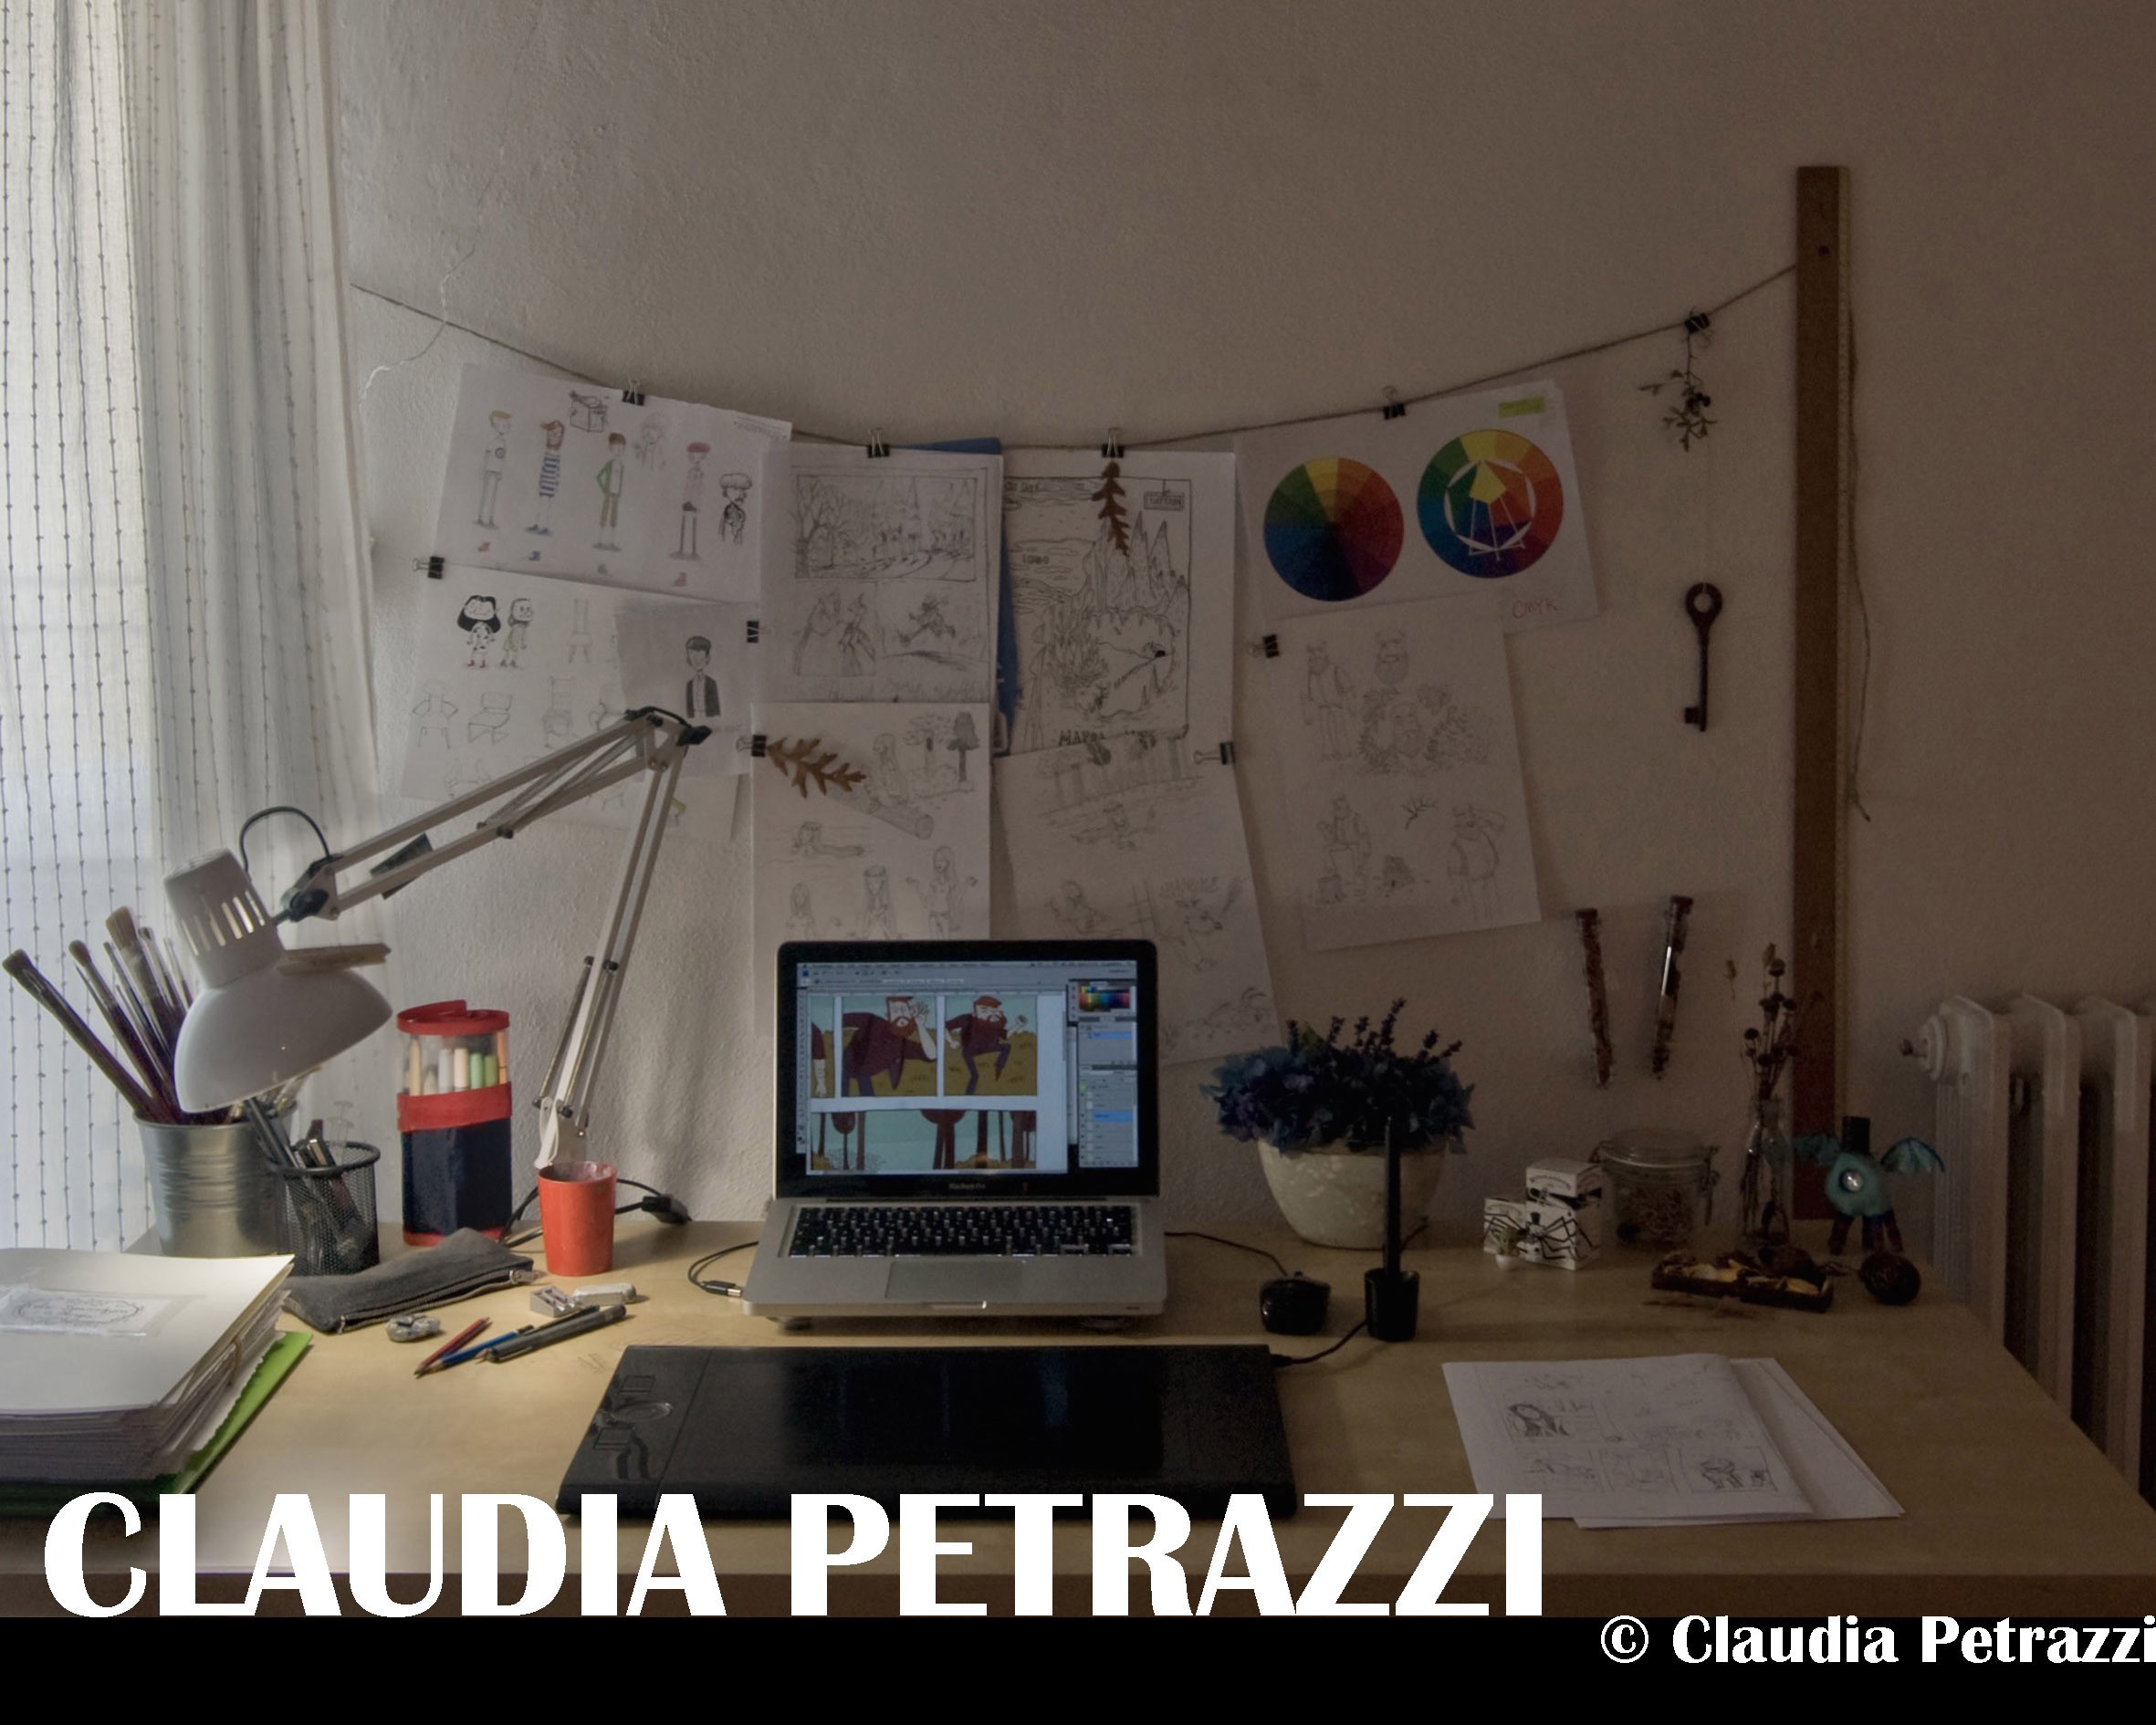 Claudia Petrazzi